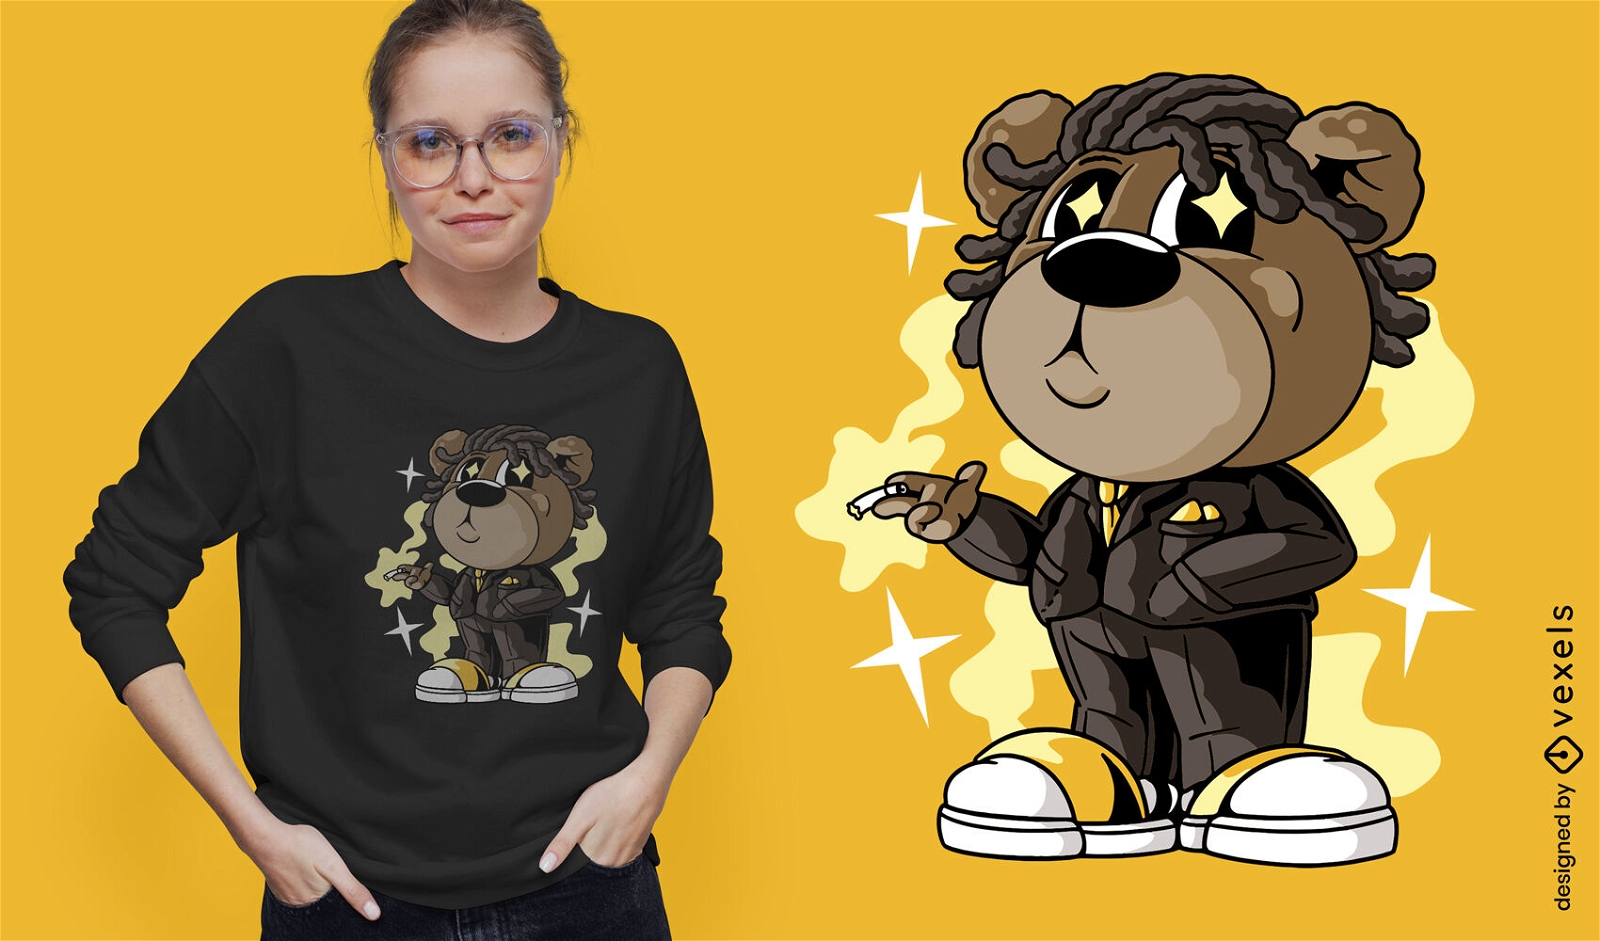 Business suit teddy bear t-shirt design